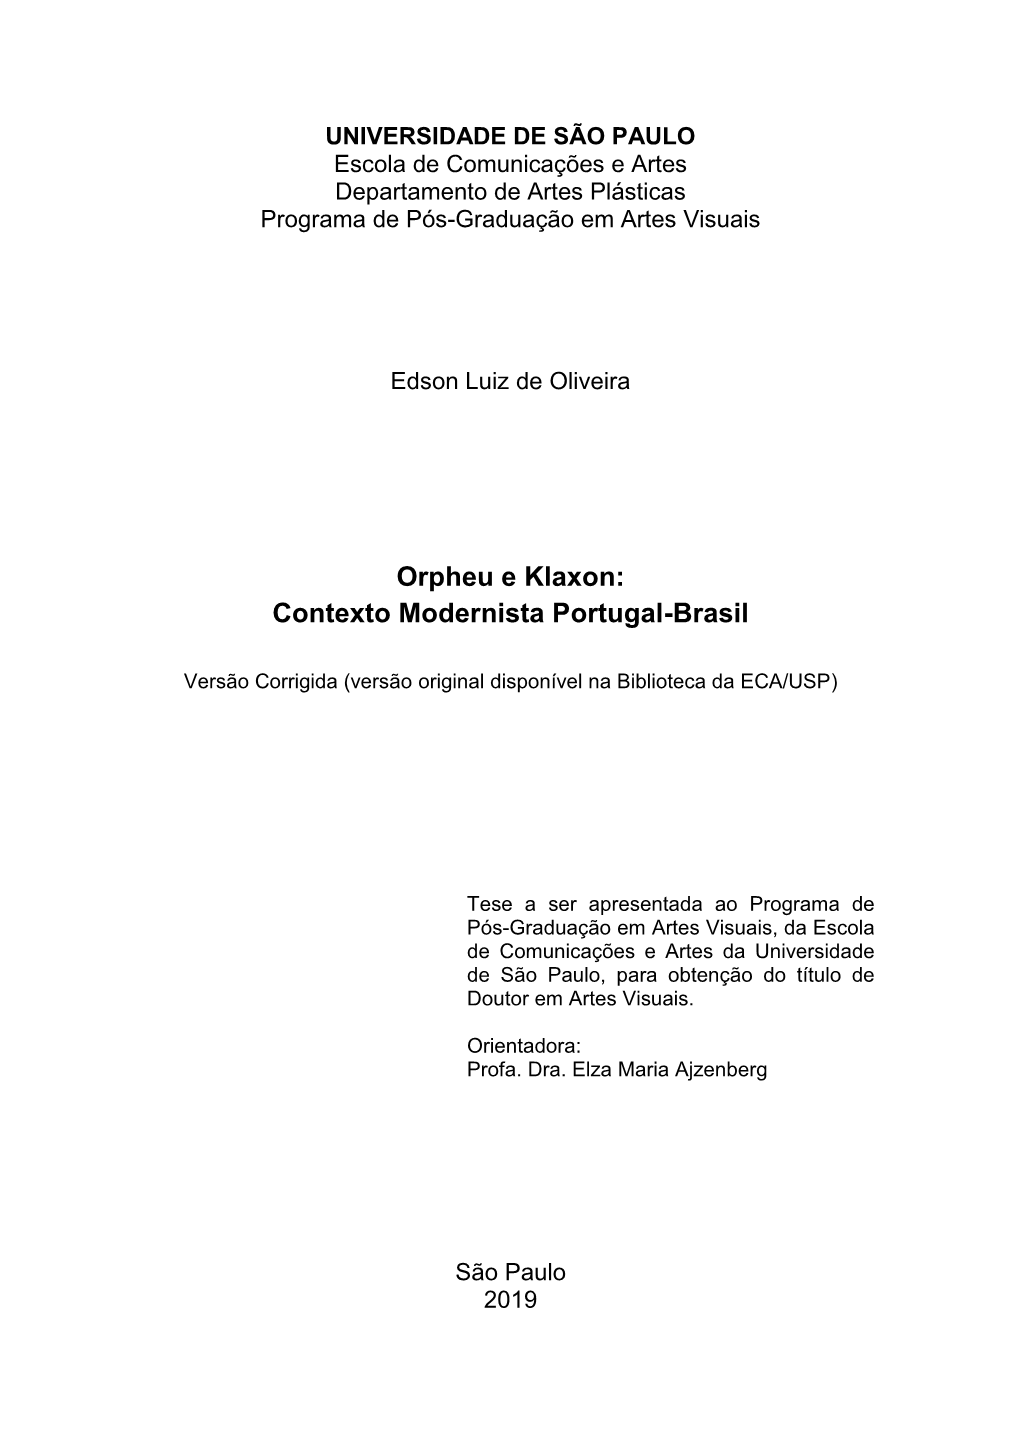 Orpheu E Klaxon: Contexto Modernista Portugal-Brasil